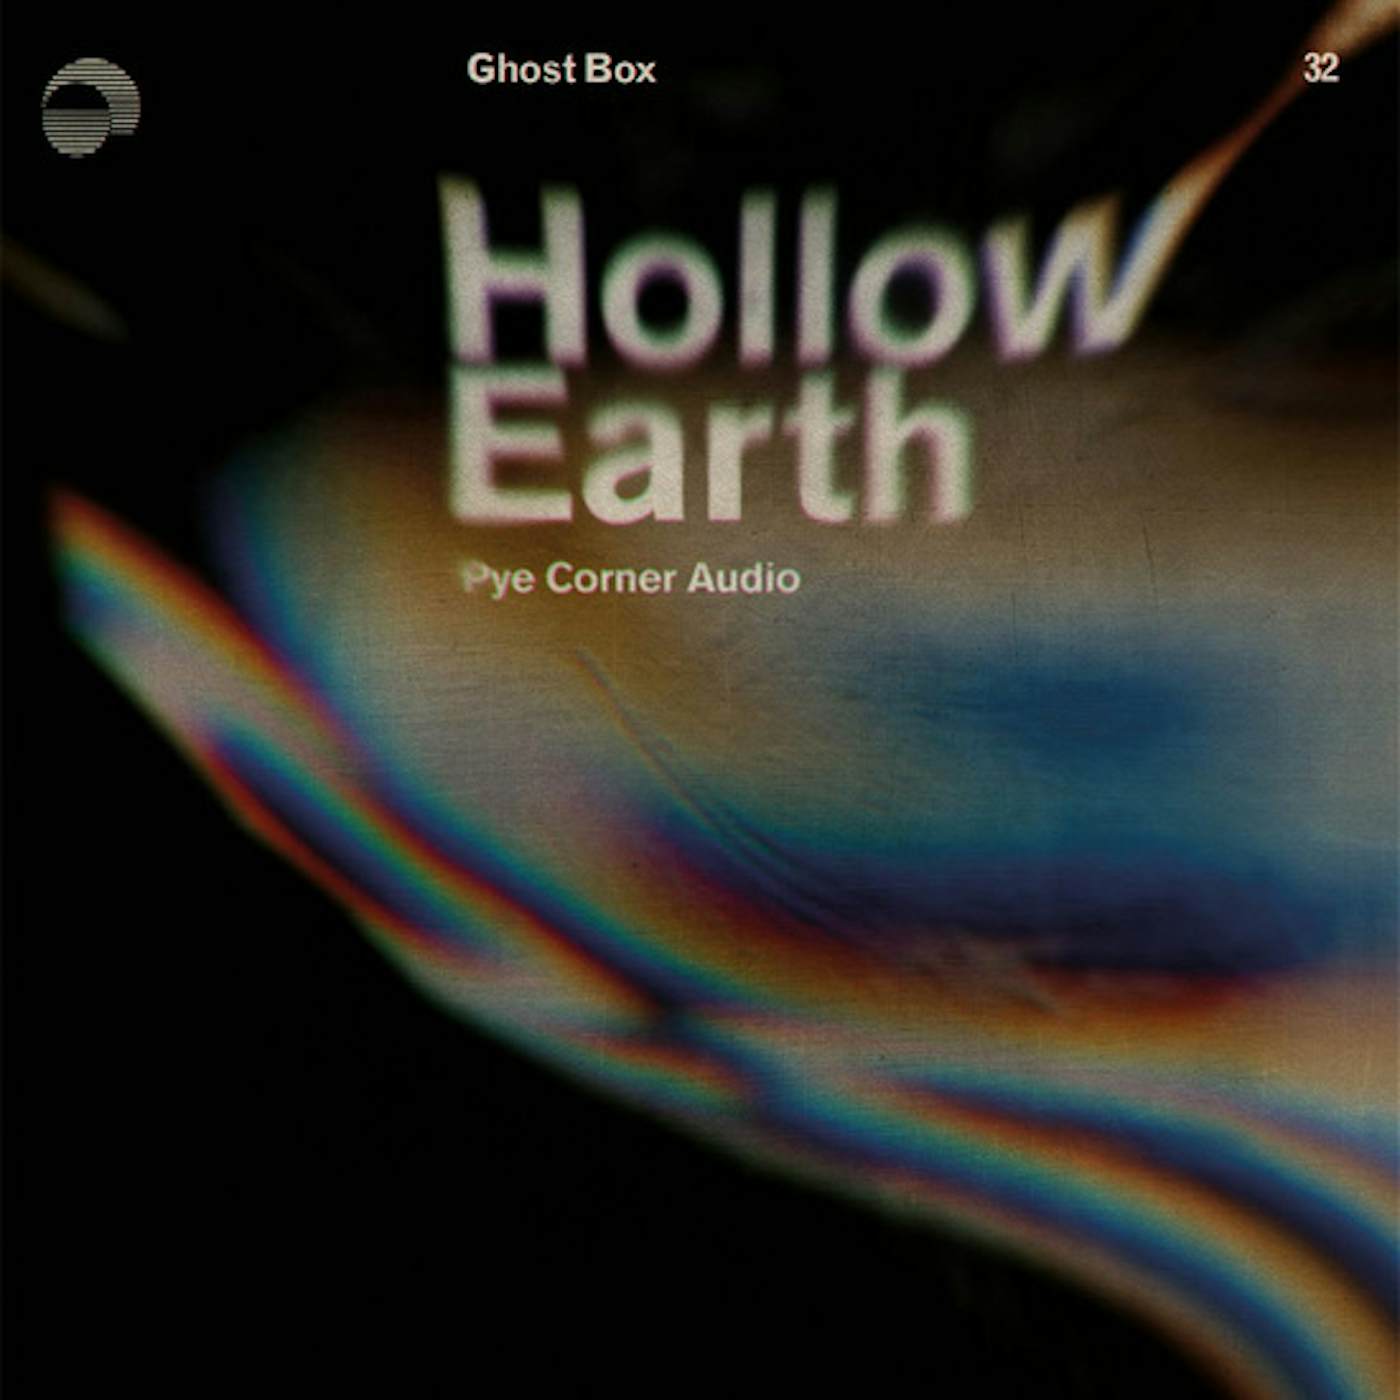 Pye Corner Audio Hollow Earth Vinyl Record